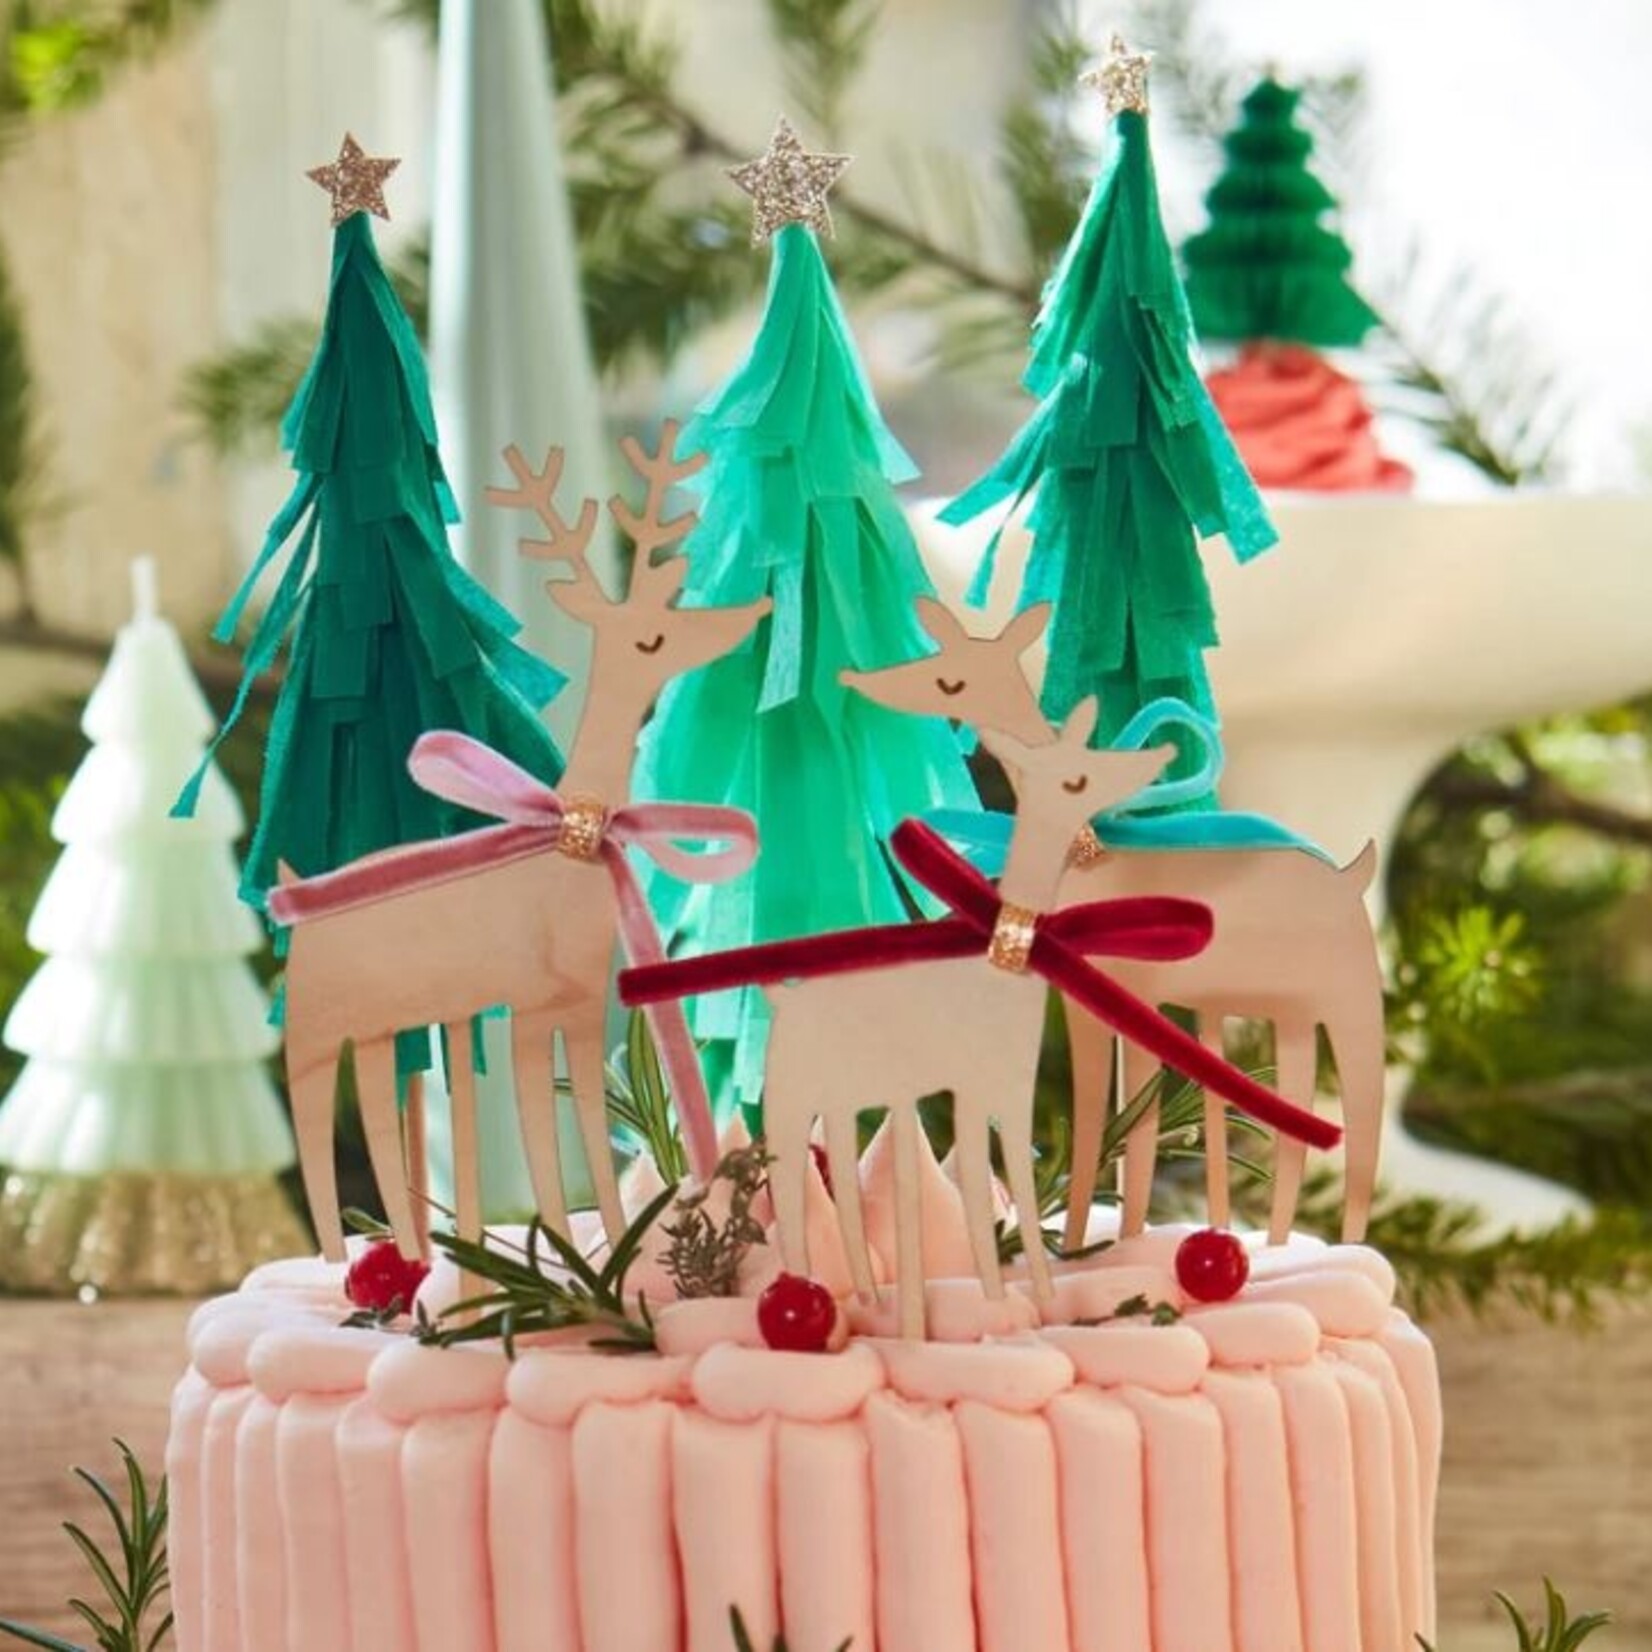 MERIMERI Reindeer family cake toppers